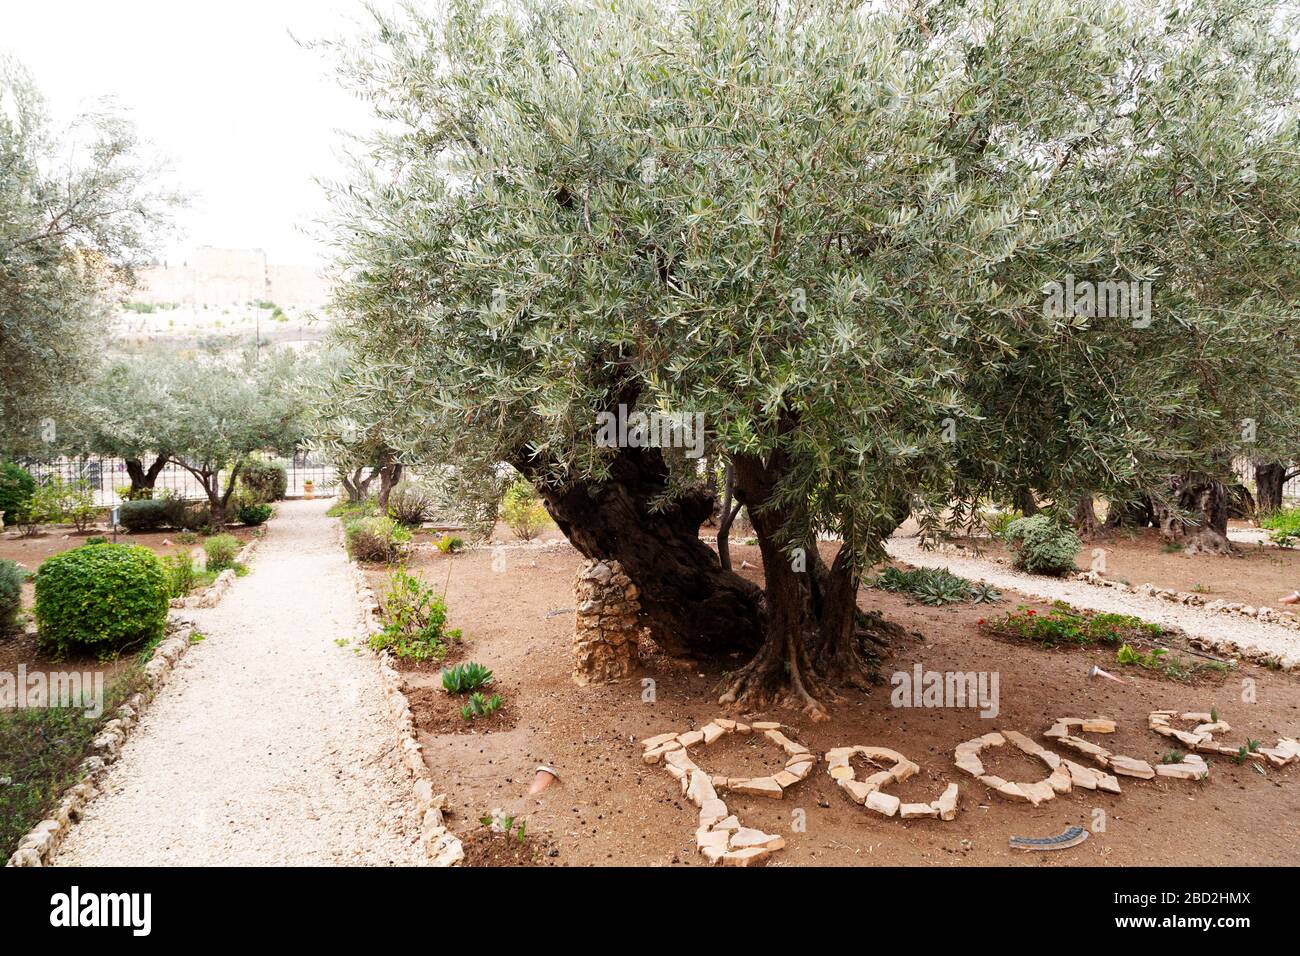 Olive tree at the Garden of Gethsemane in Jerusalem, Israel Stock Photo -  Alamy